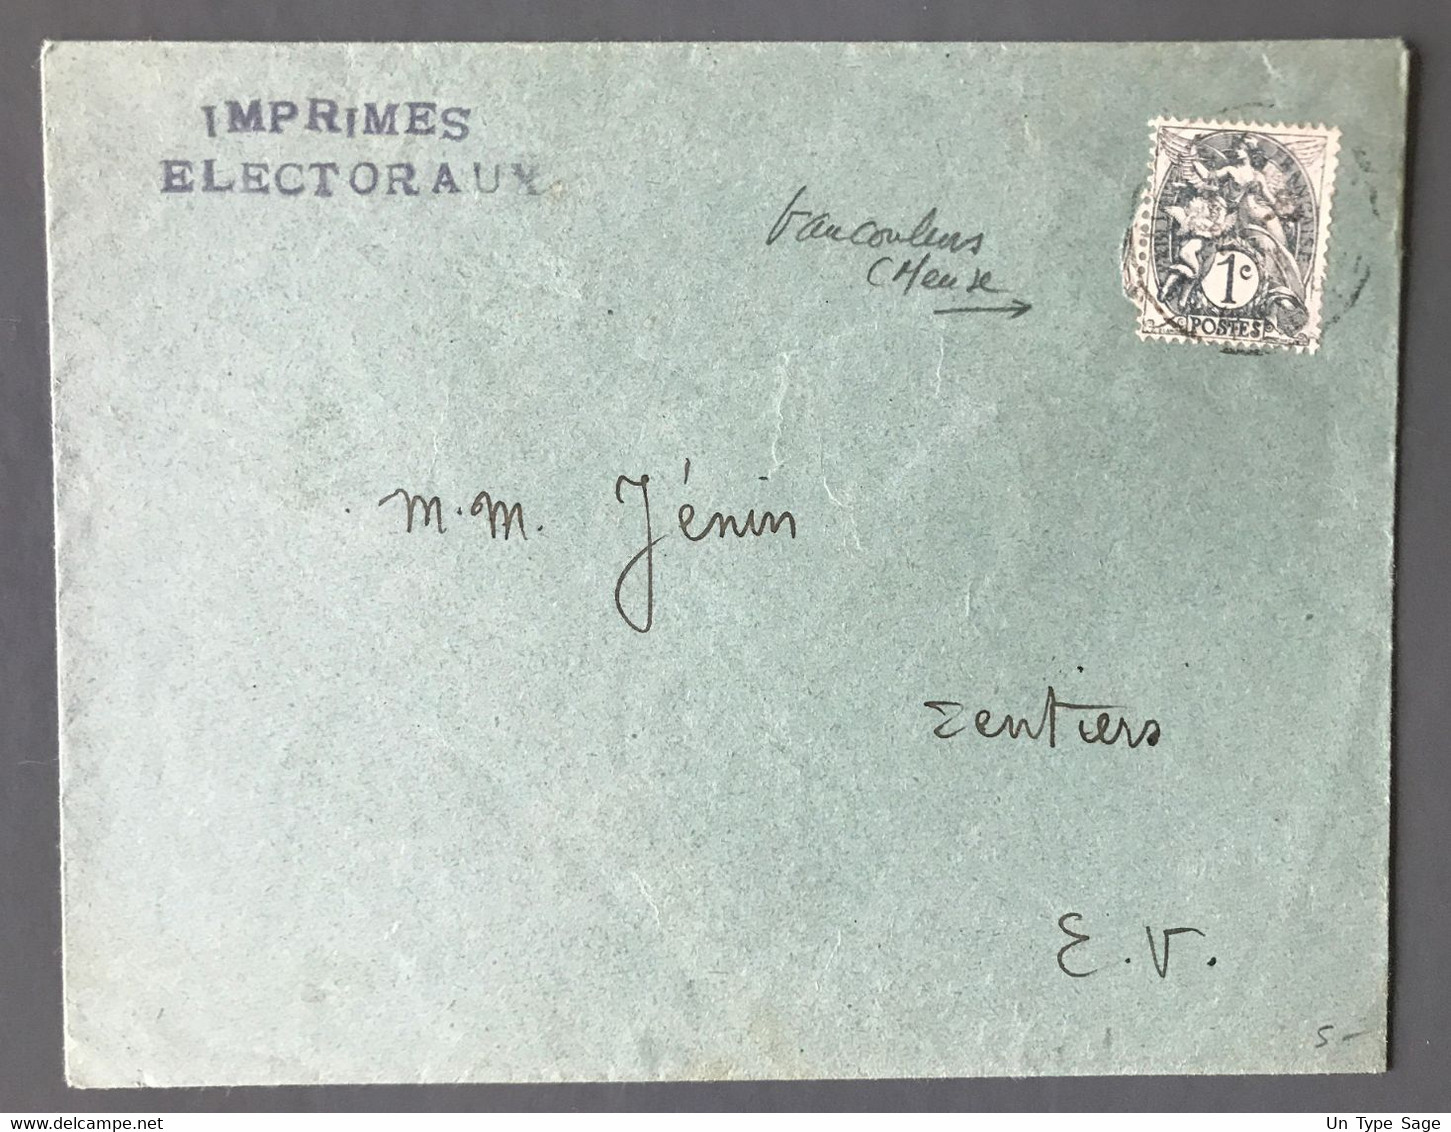 France N°107 Sur Enveloppe - Tarif Imprimés Electoraux - (C2050) - 1877-1920: Periodo Semi Moderno